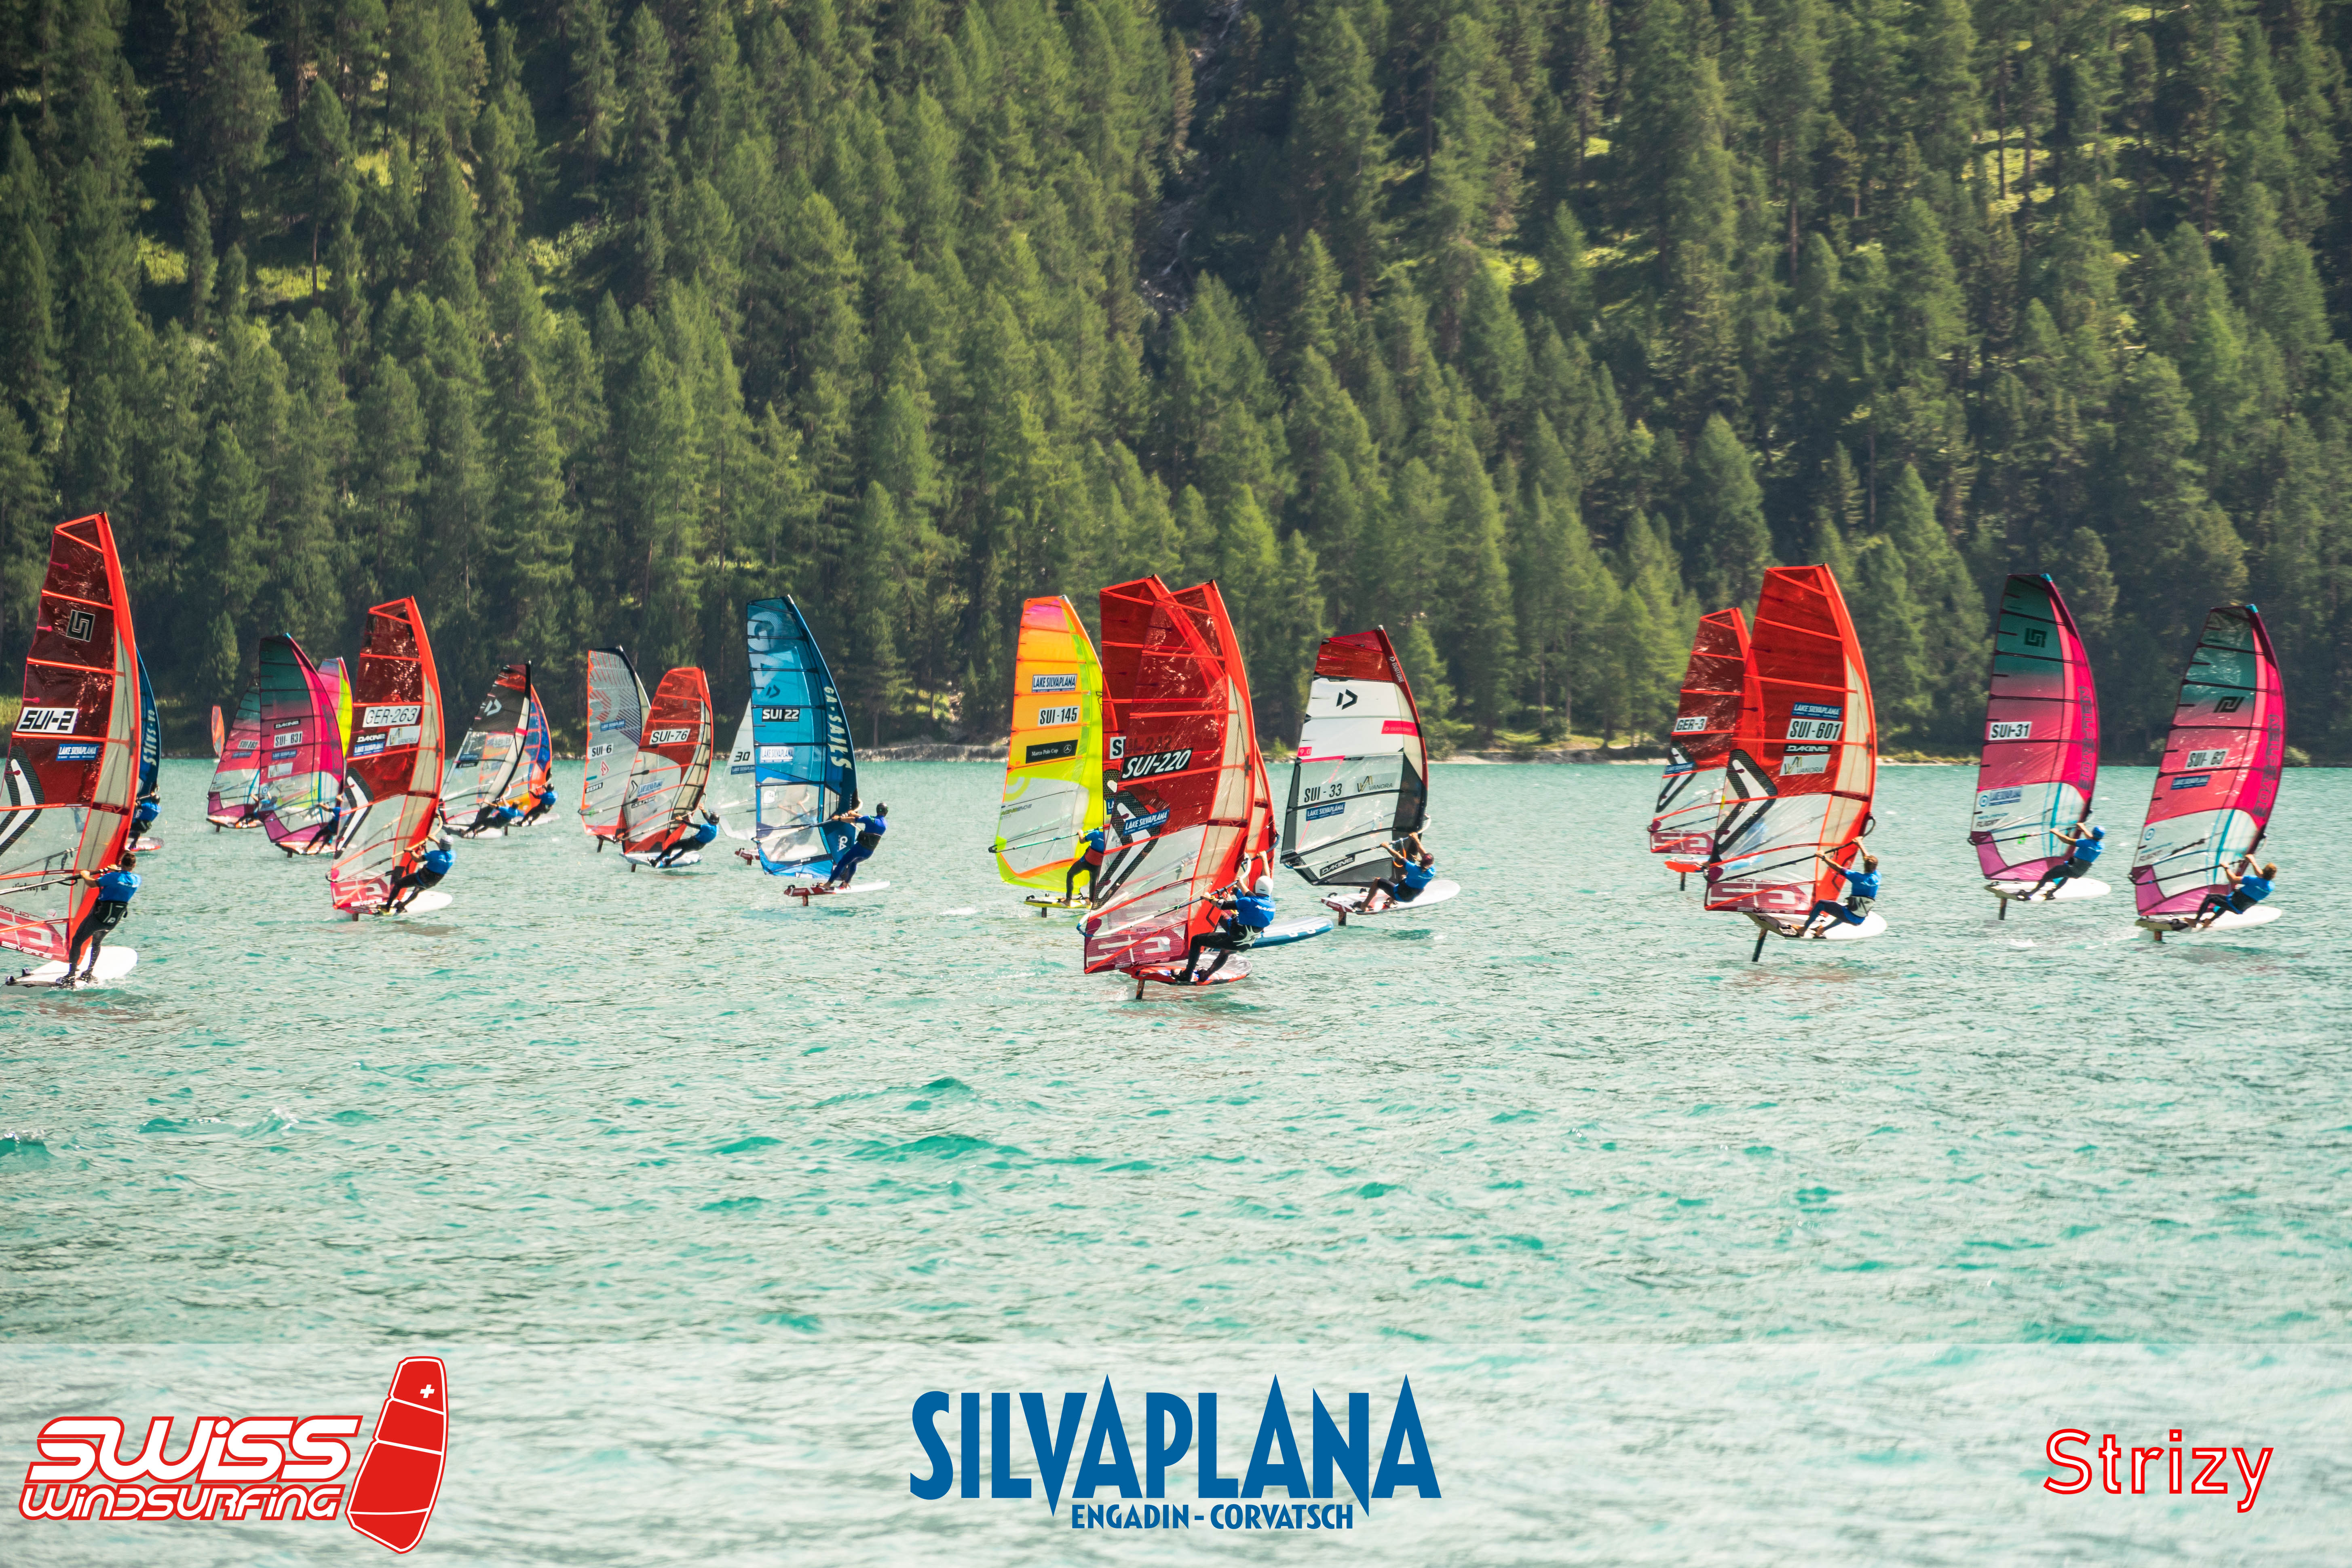  Windsurfing  Swiss Championship 2019  Silvaplana SUI  Day 2